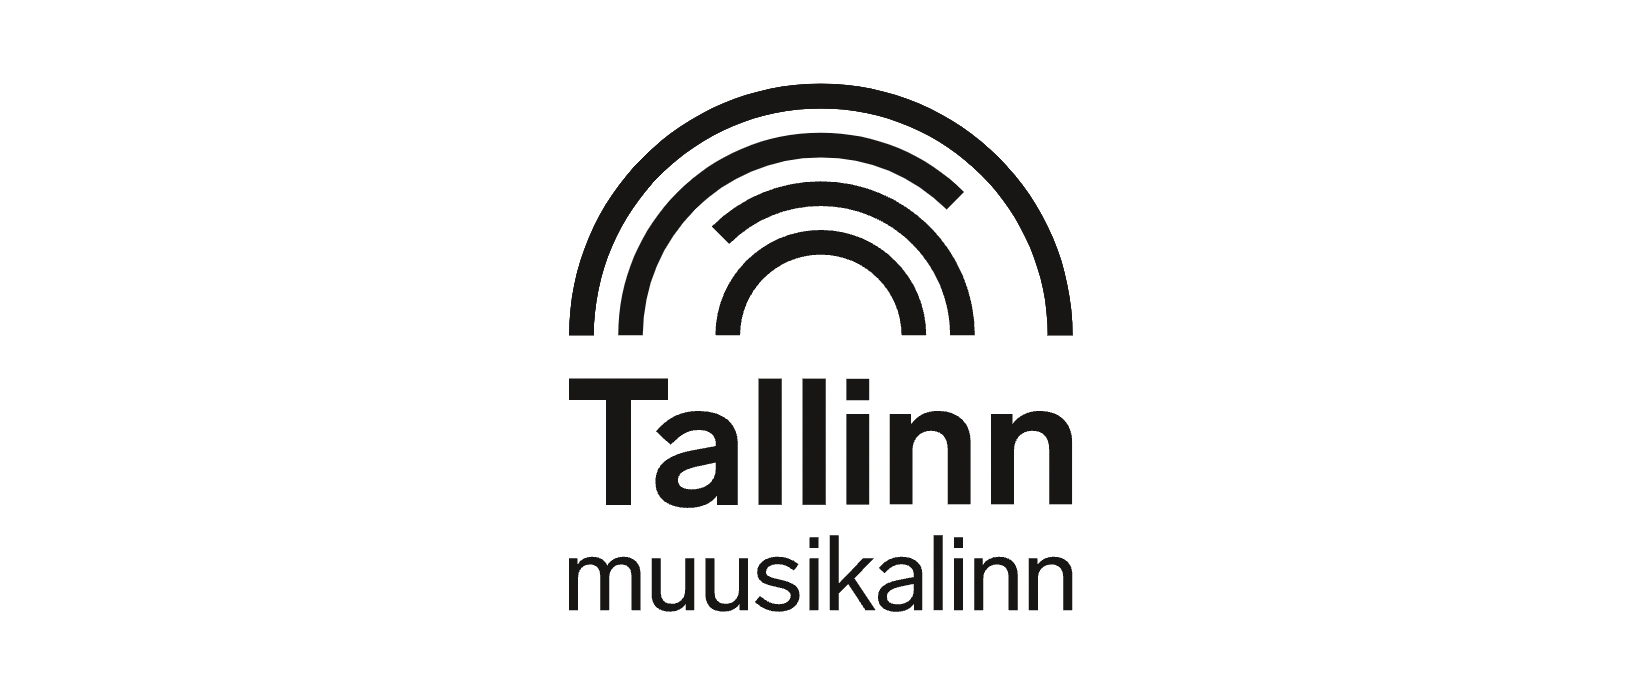 Tallinn muusikalinn screenshot